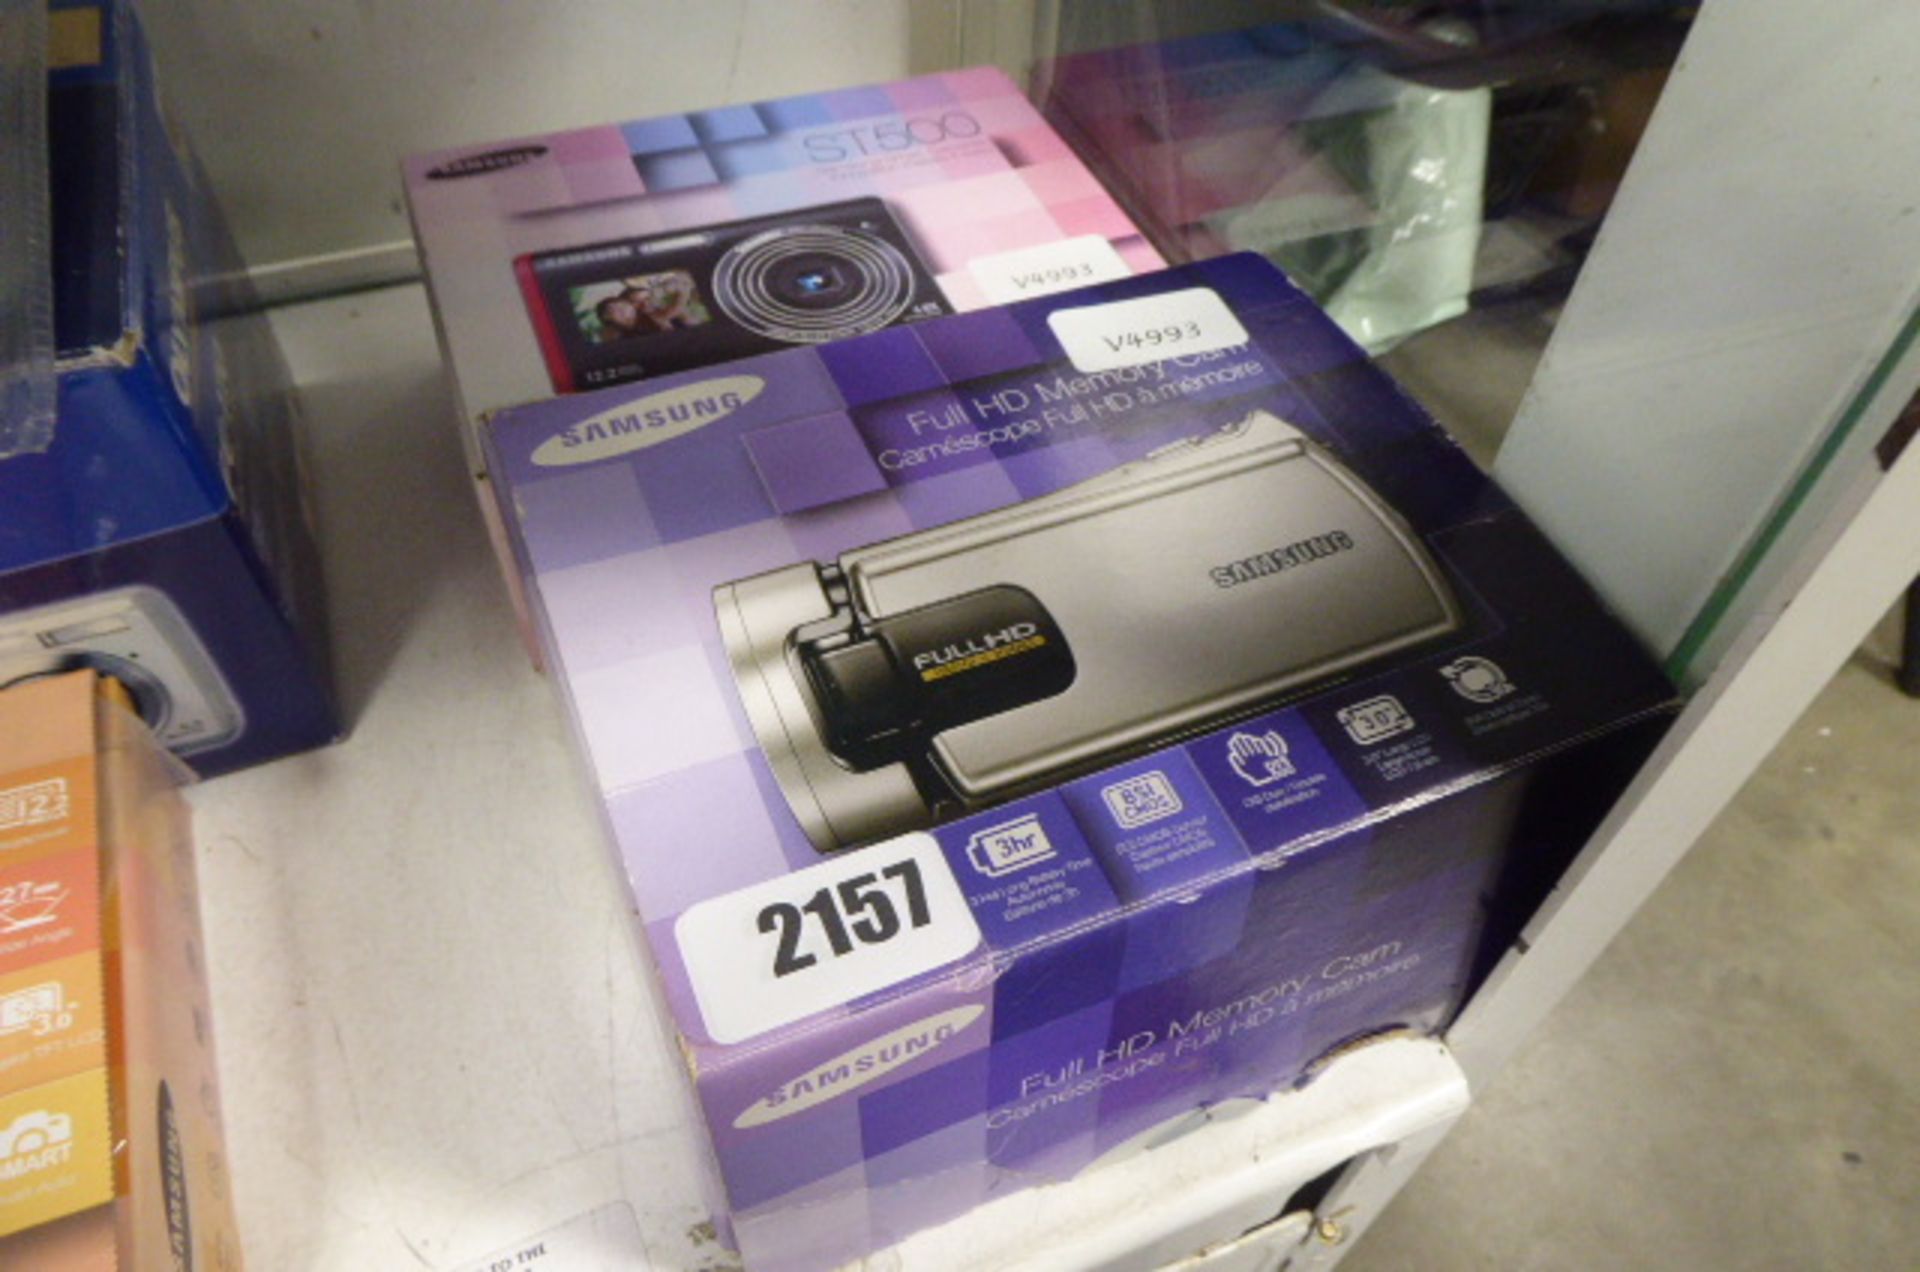 2321 Samsung HD camcorder with Samsung SD500 digital camera